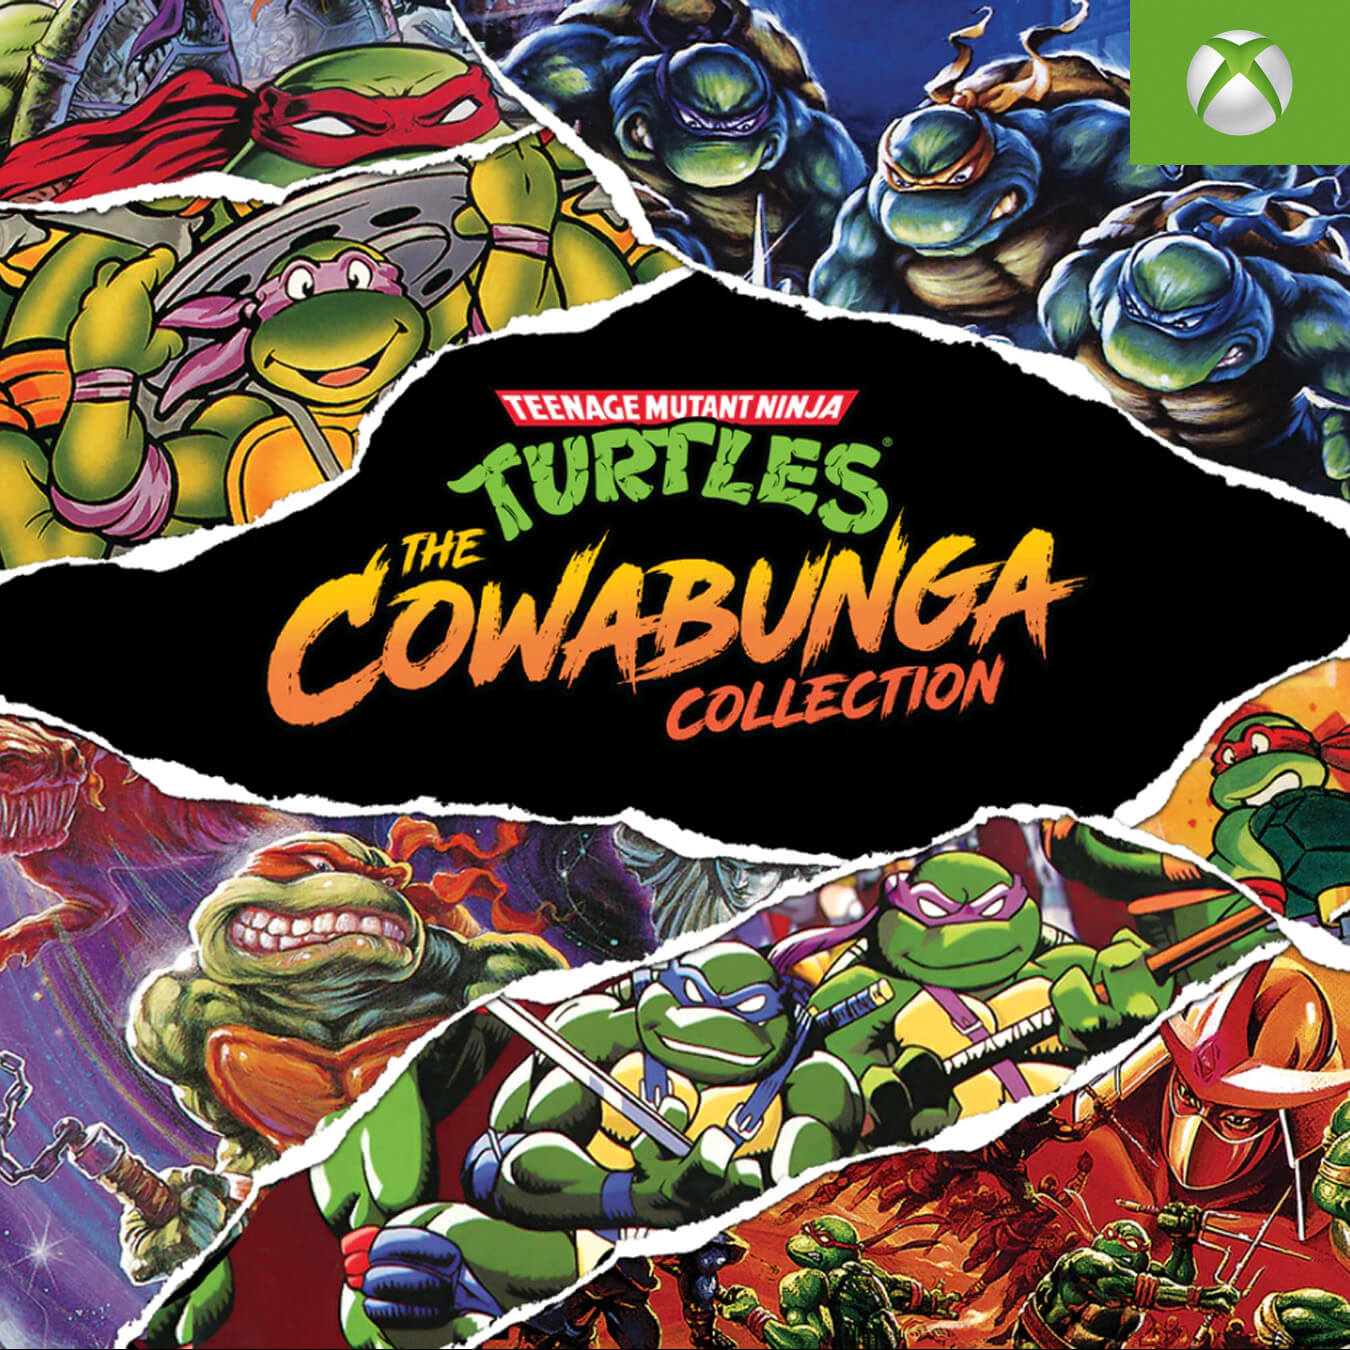 Mutant ninja turtles cowabunga collection. Teenage Mutant Ninja Turtles: the Cowabunga collection. TMNT Cowabunga collection ps4. Turtles the Cowabunga ps4. Игра teenage Mutant Ninja Turtles: the Cowabunga collection (ps4).